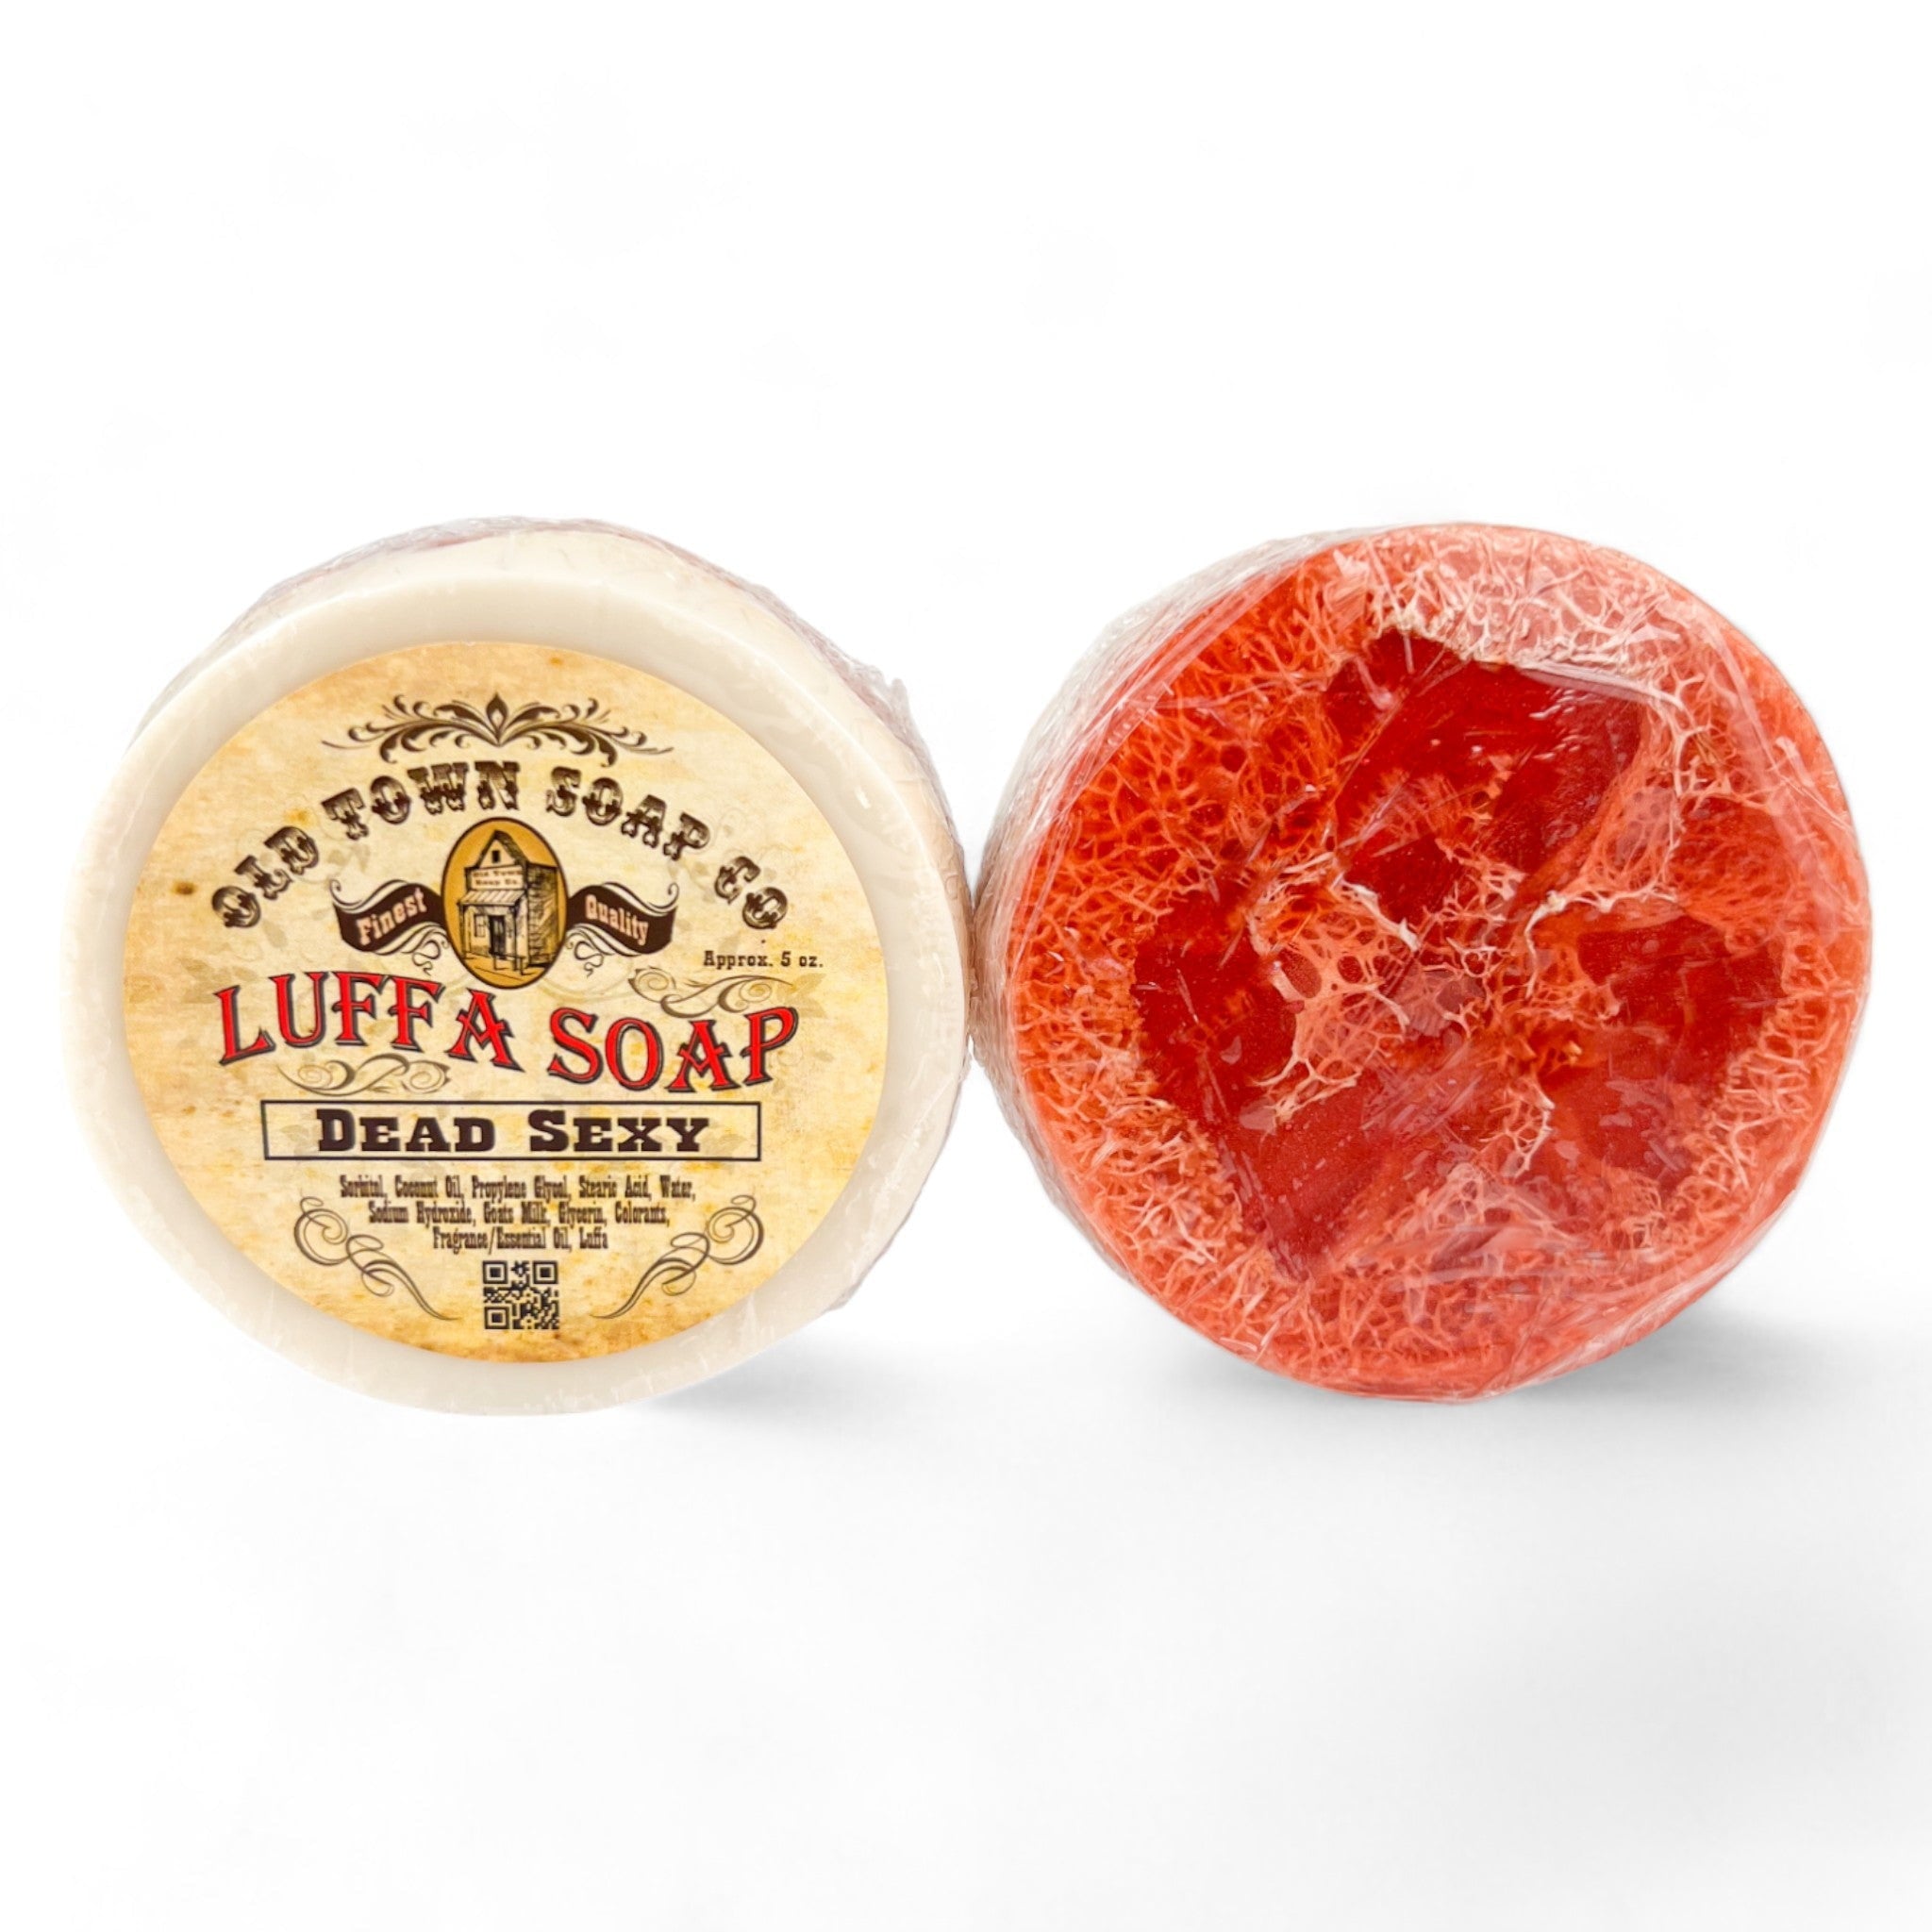 Dead Sexy -Luffa Soap - Old Town Soap Co.